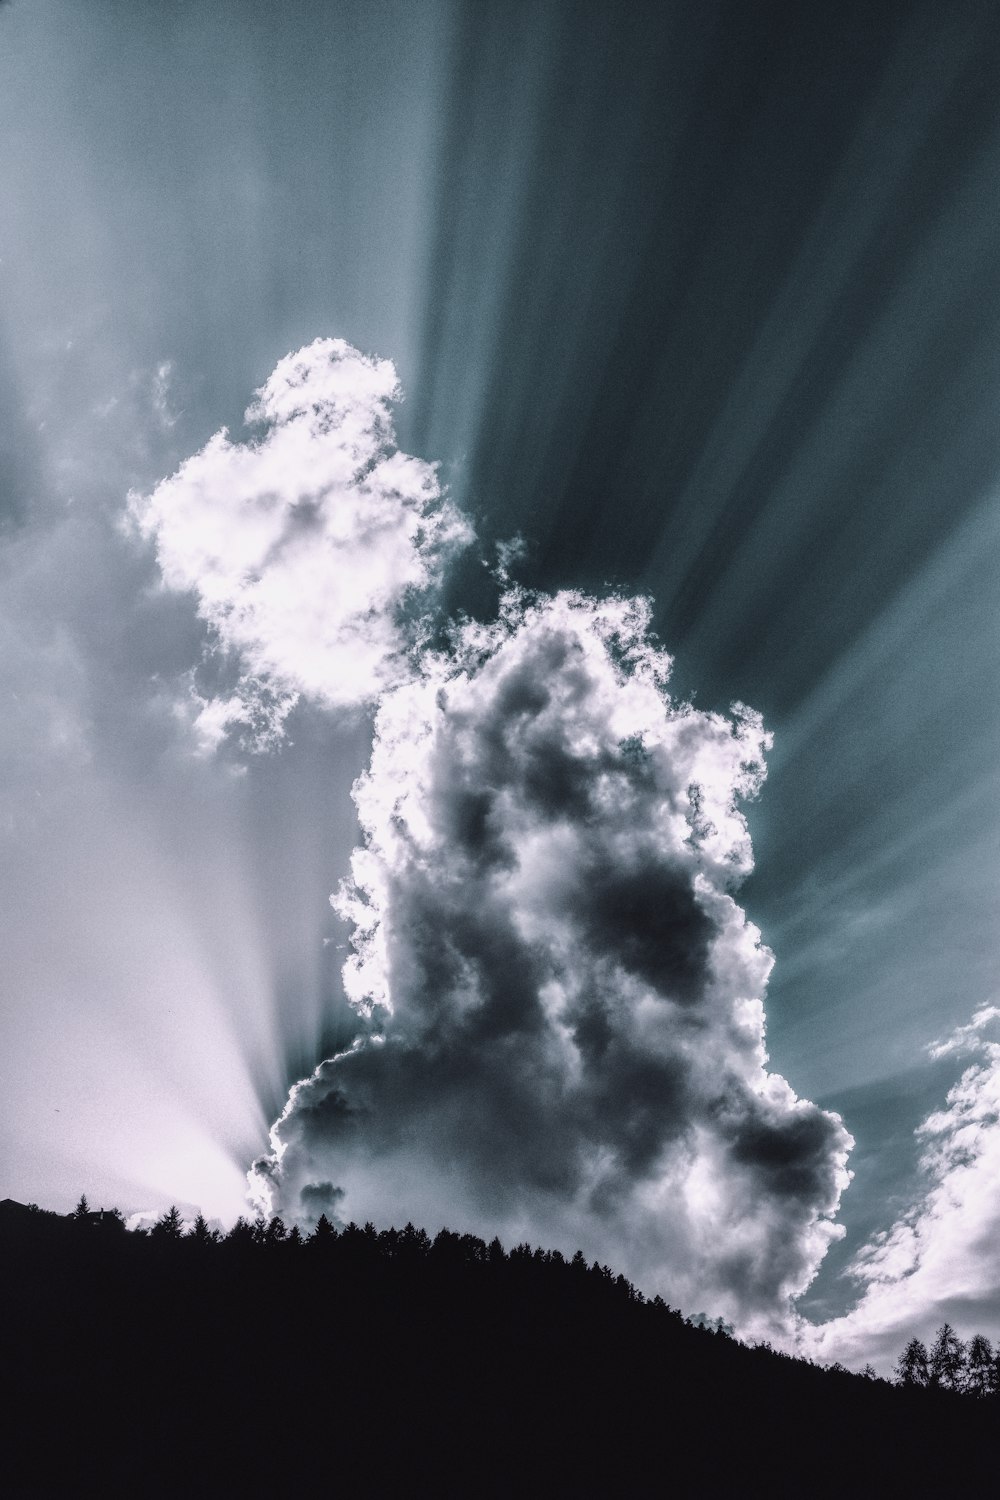 sunlight rays through cloud